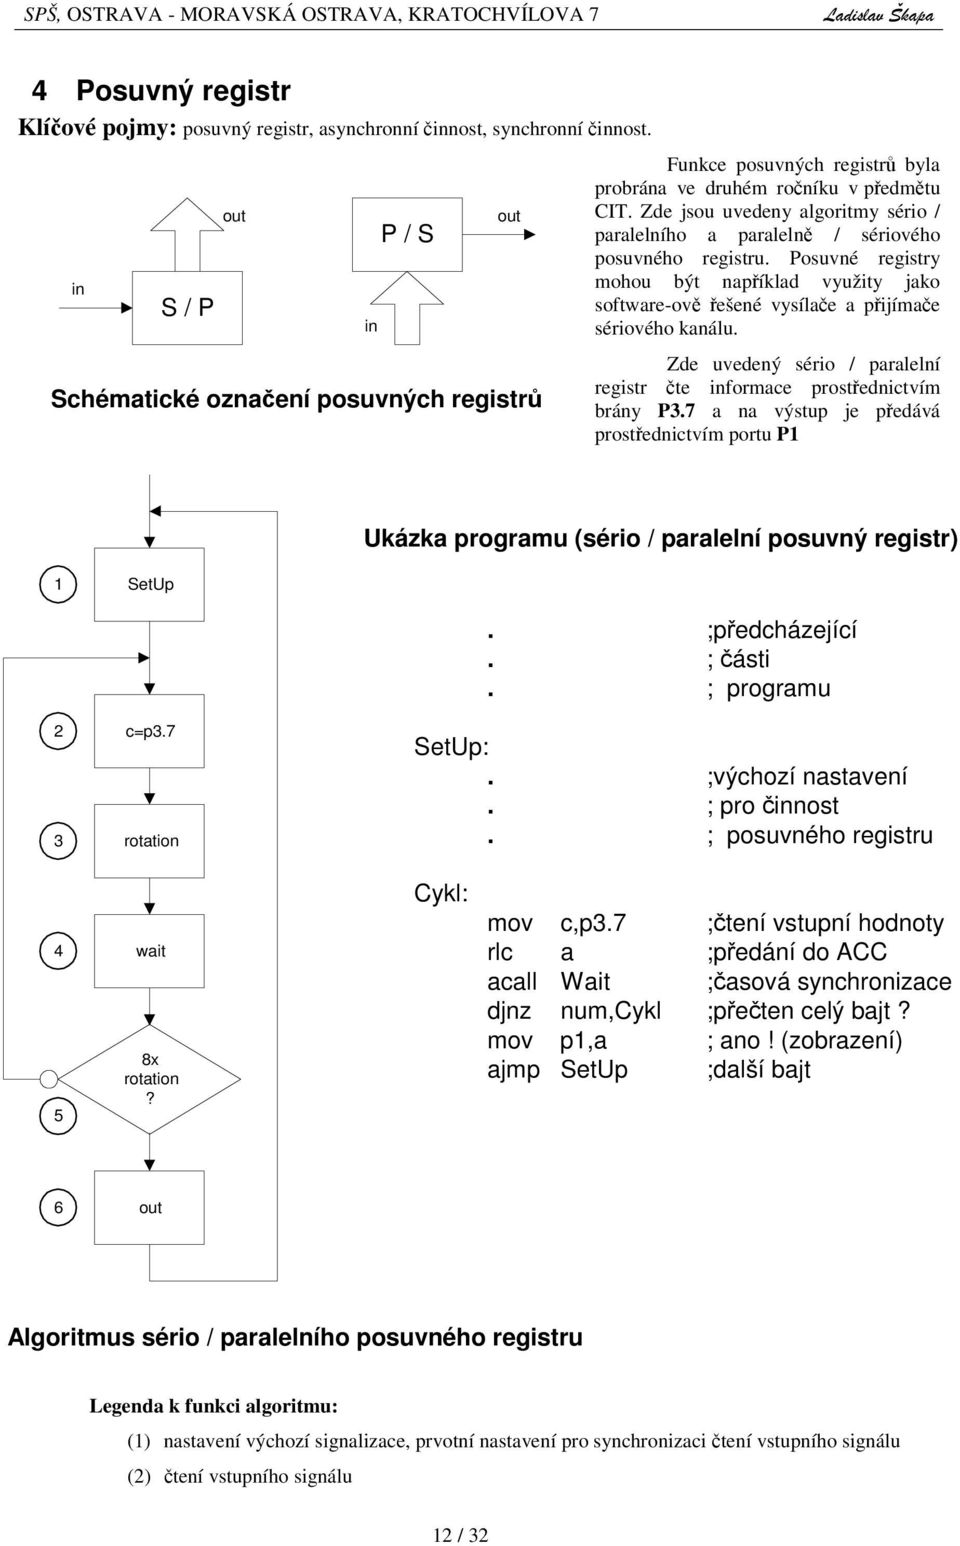 Zde jsou uvedeny algoritmy sério / paralelního a paraleln / sériového posuvného registru. Posuvné registry mohou být napíklad využity jako software-ov ešené vysílae a pijímae sériového kanálu.